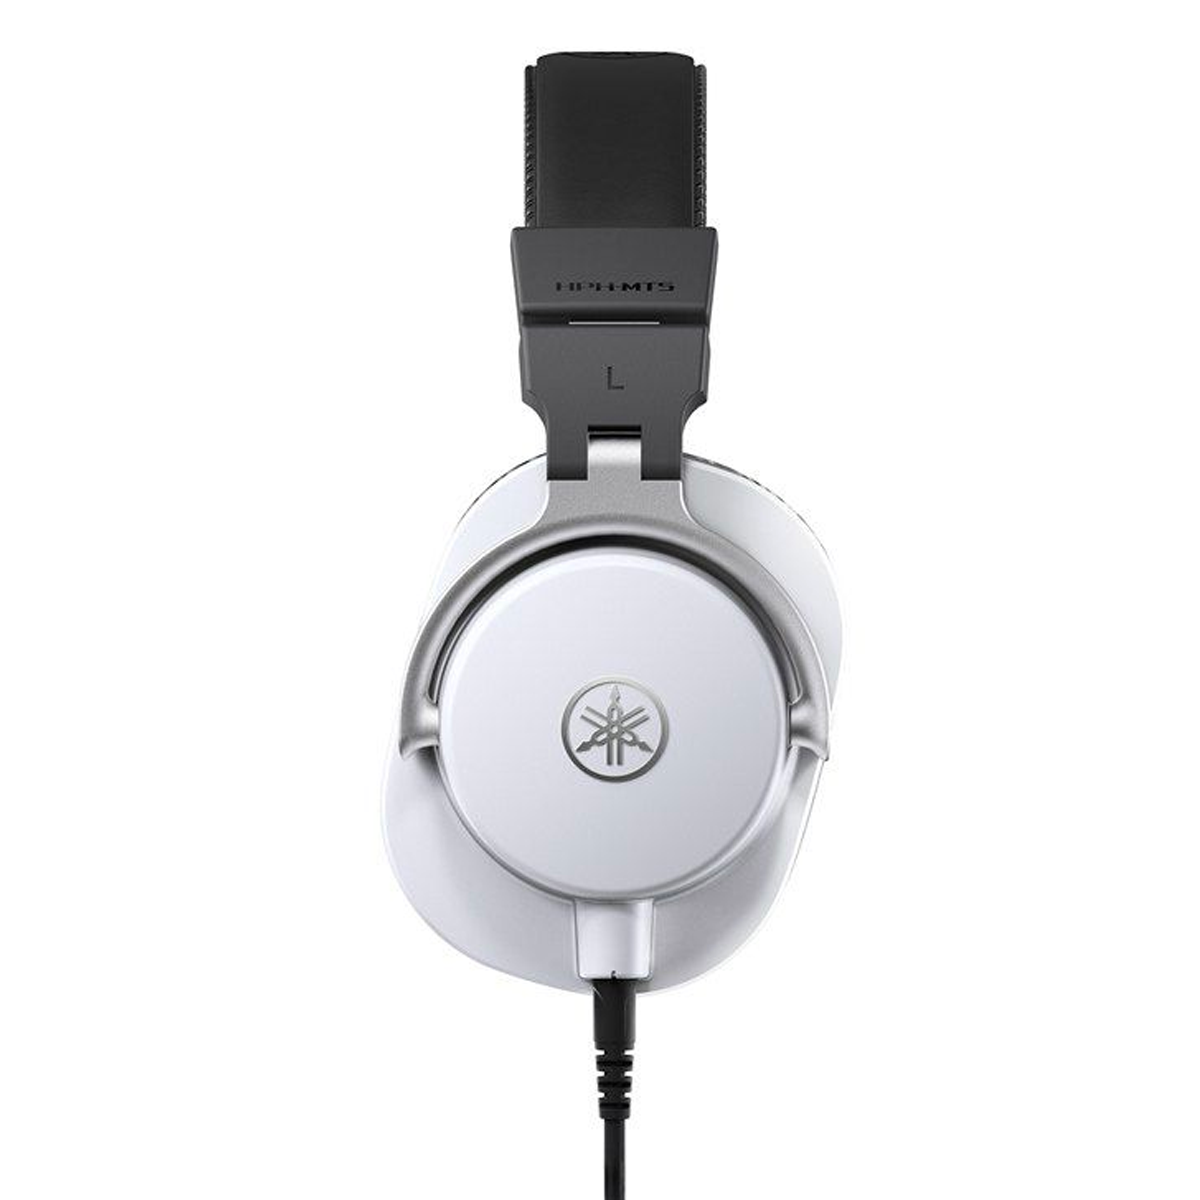 Yamaha HPH-MT5W Studio Monitor Headphones